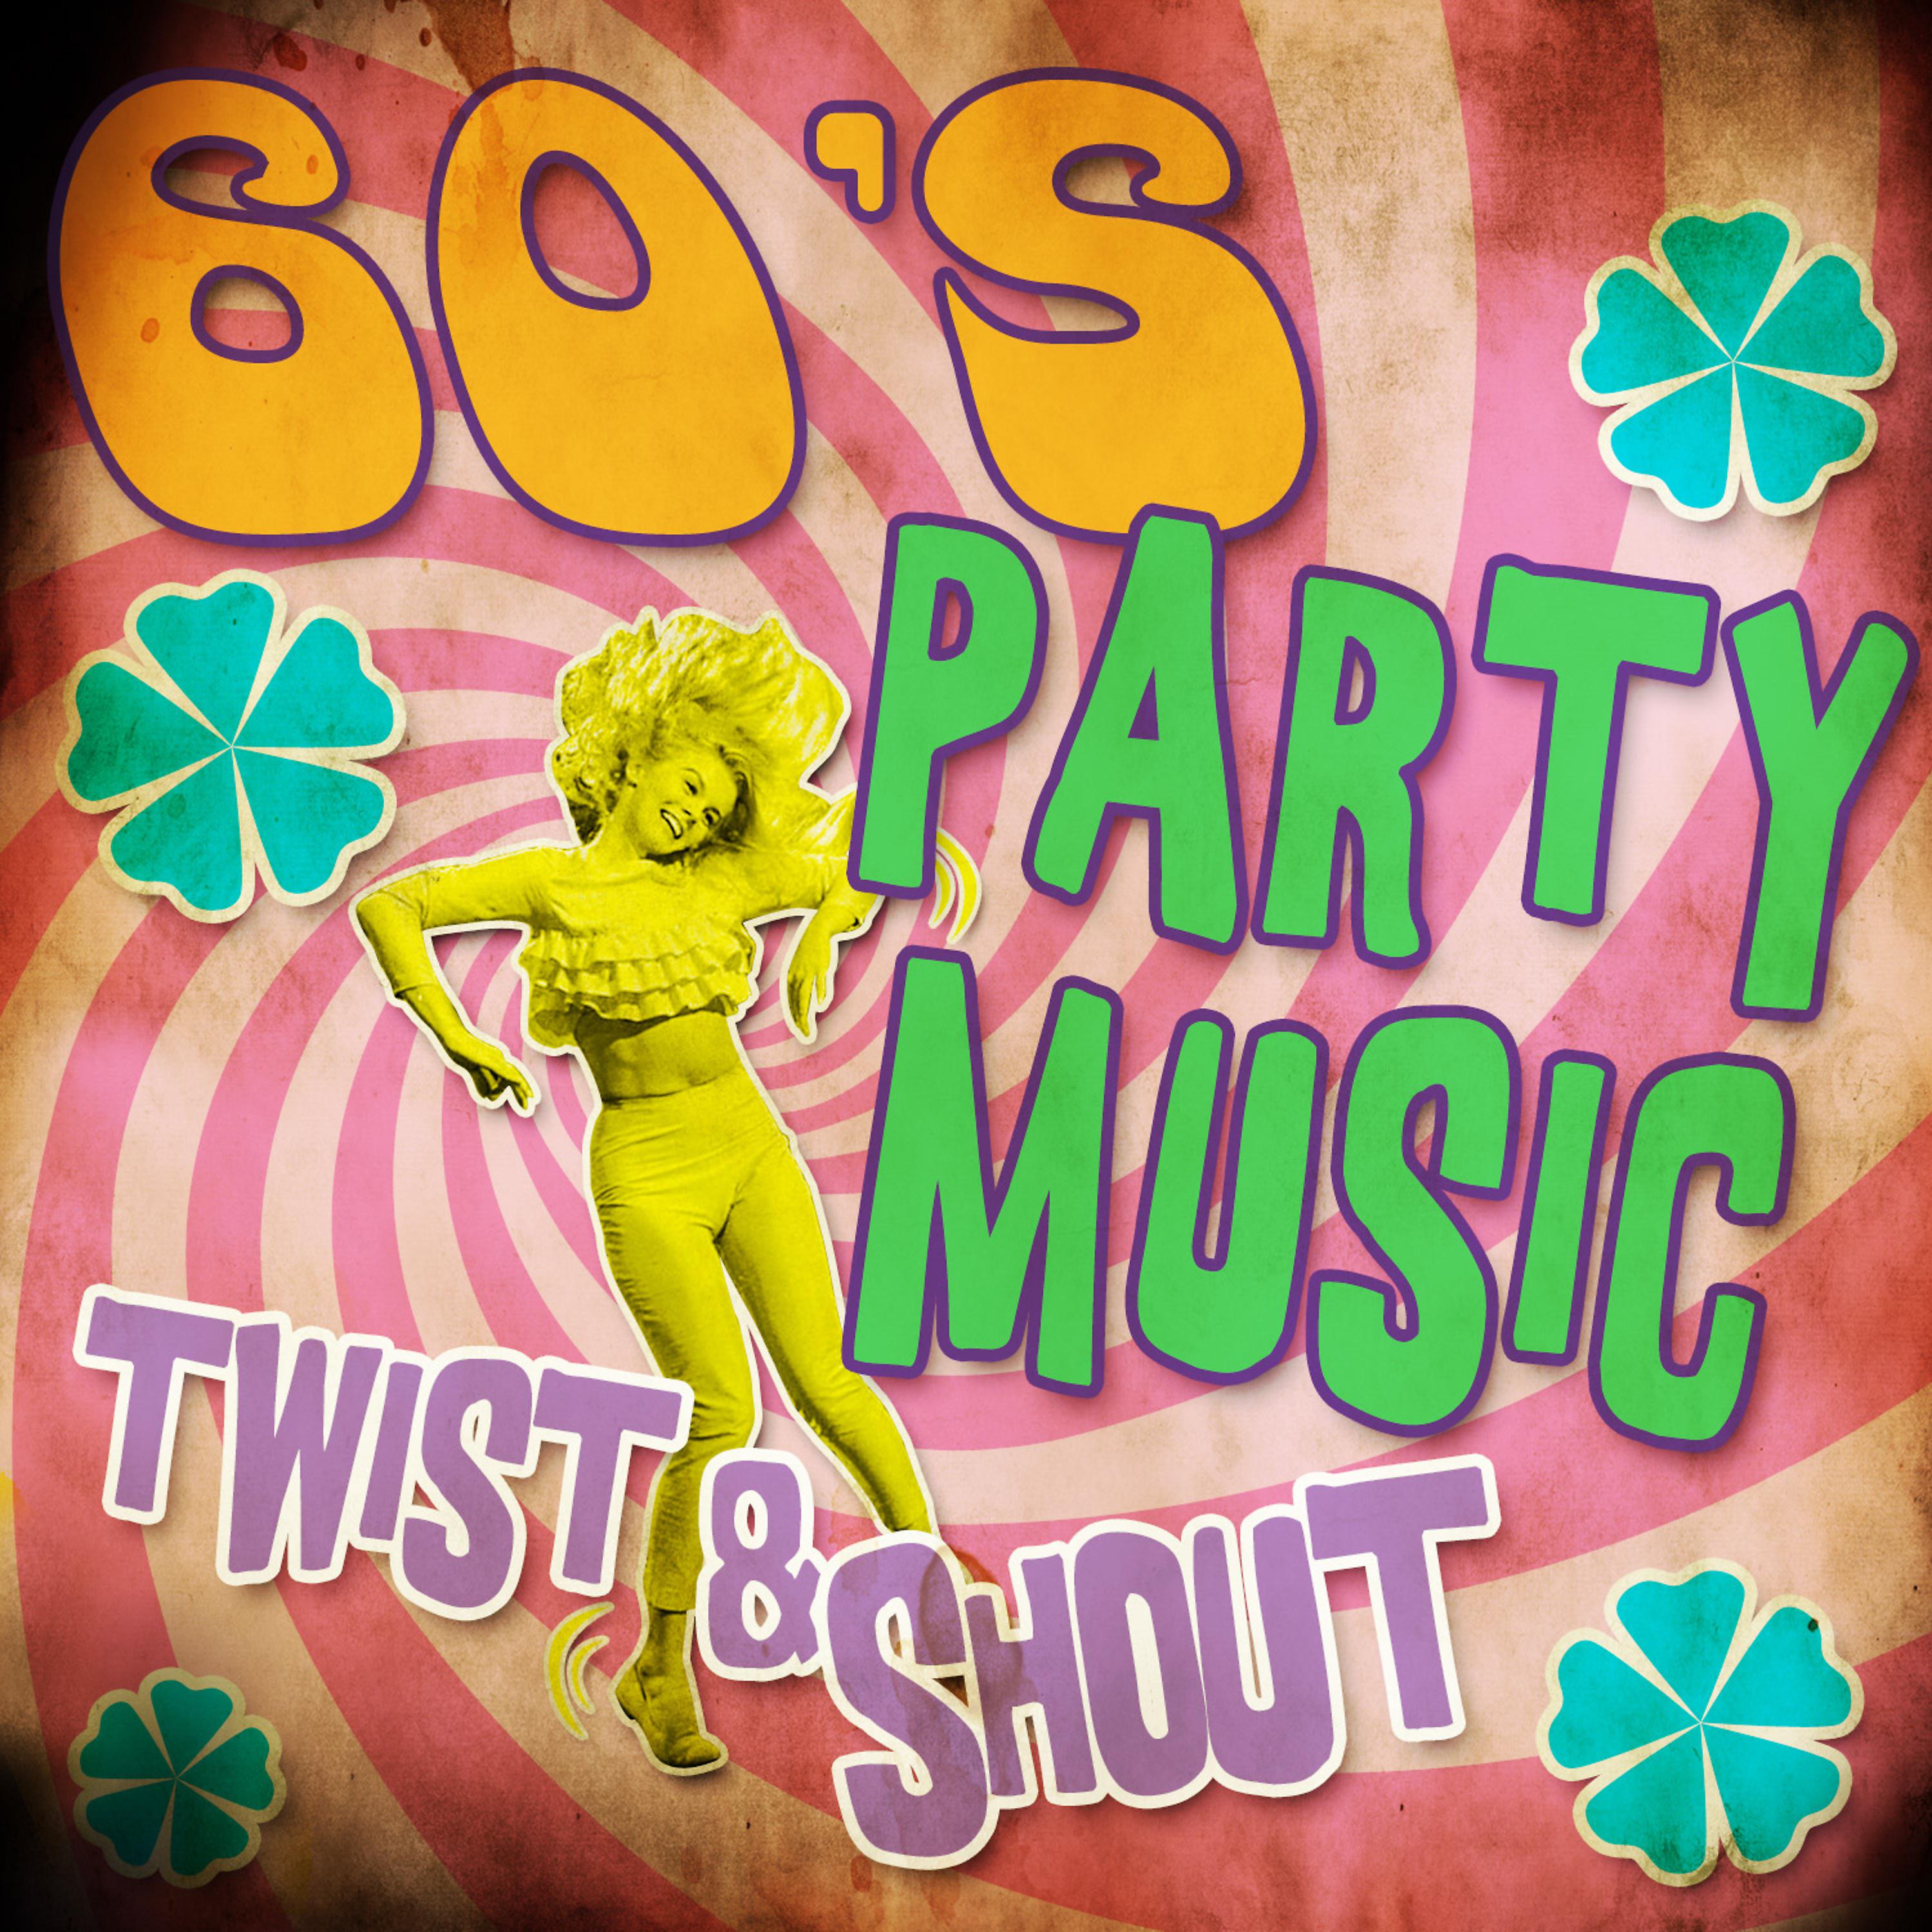 Постер альбома 60's Party Music Twist & Shout